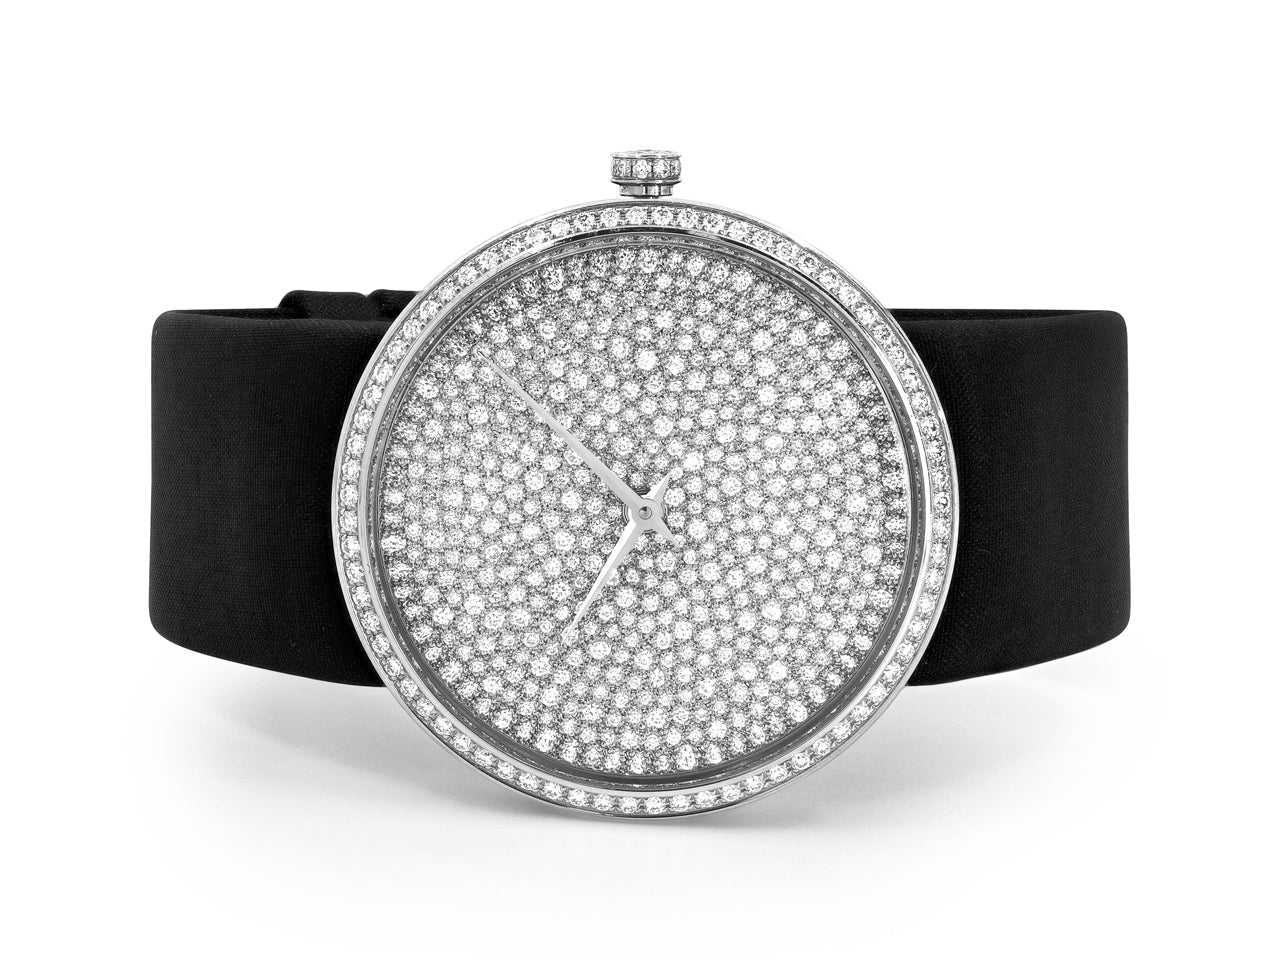 Dior 'La D de Dior Snow-Set' Diamond Watch in 18K White Gold